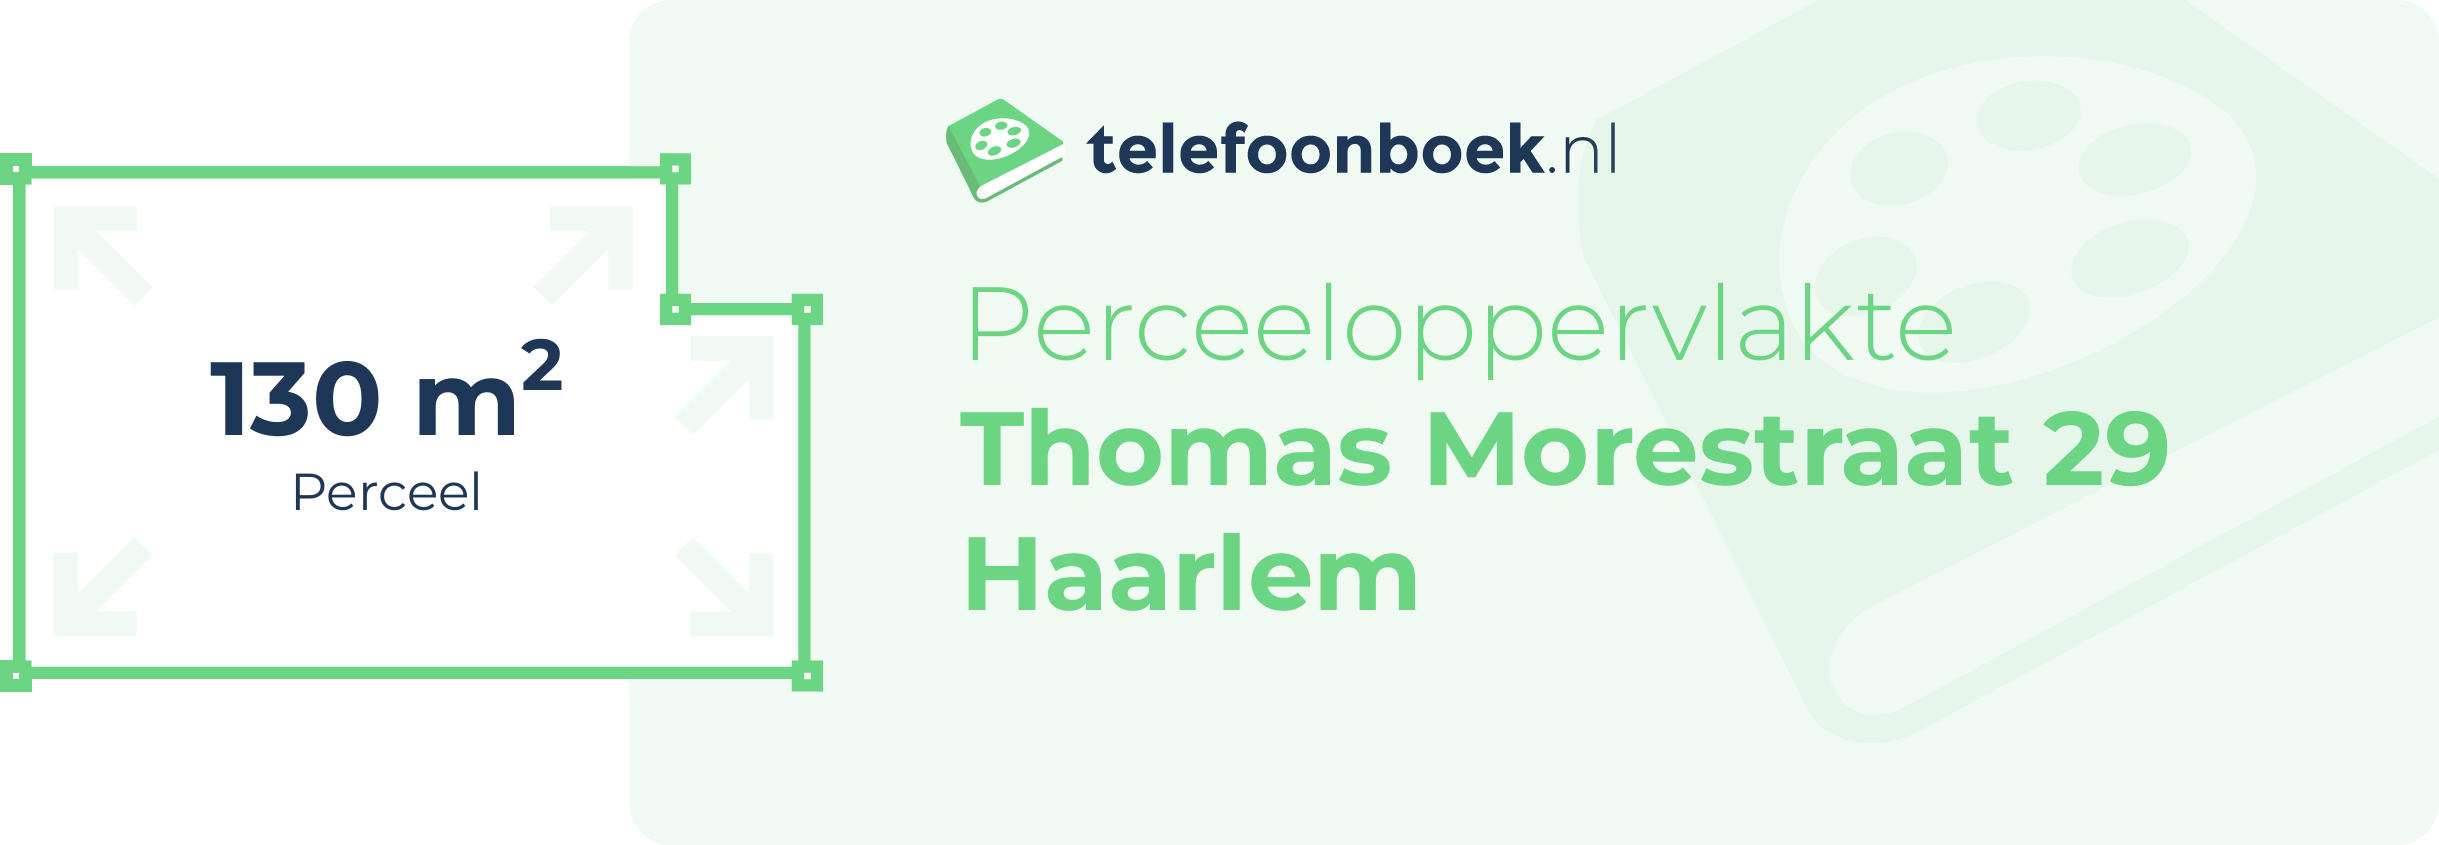 Perceeloppervlakte Thomas Morestraat 29 Haarlem